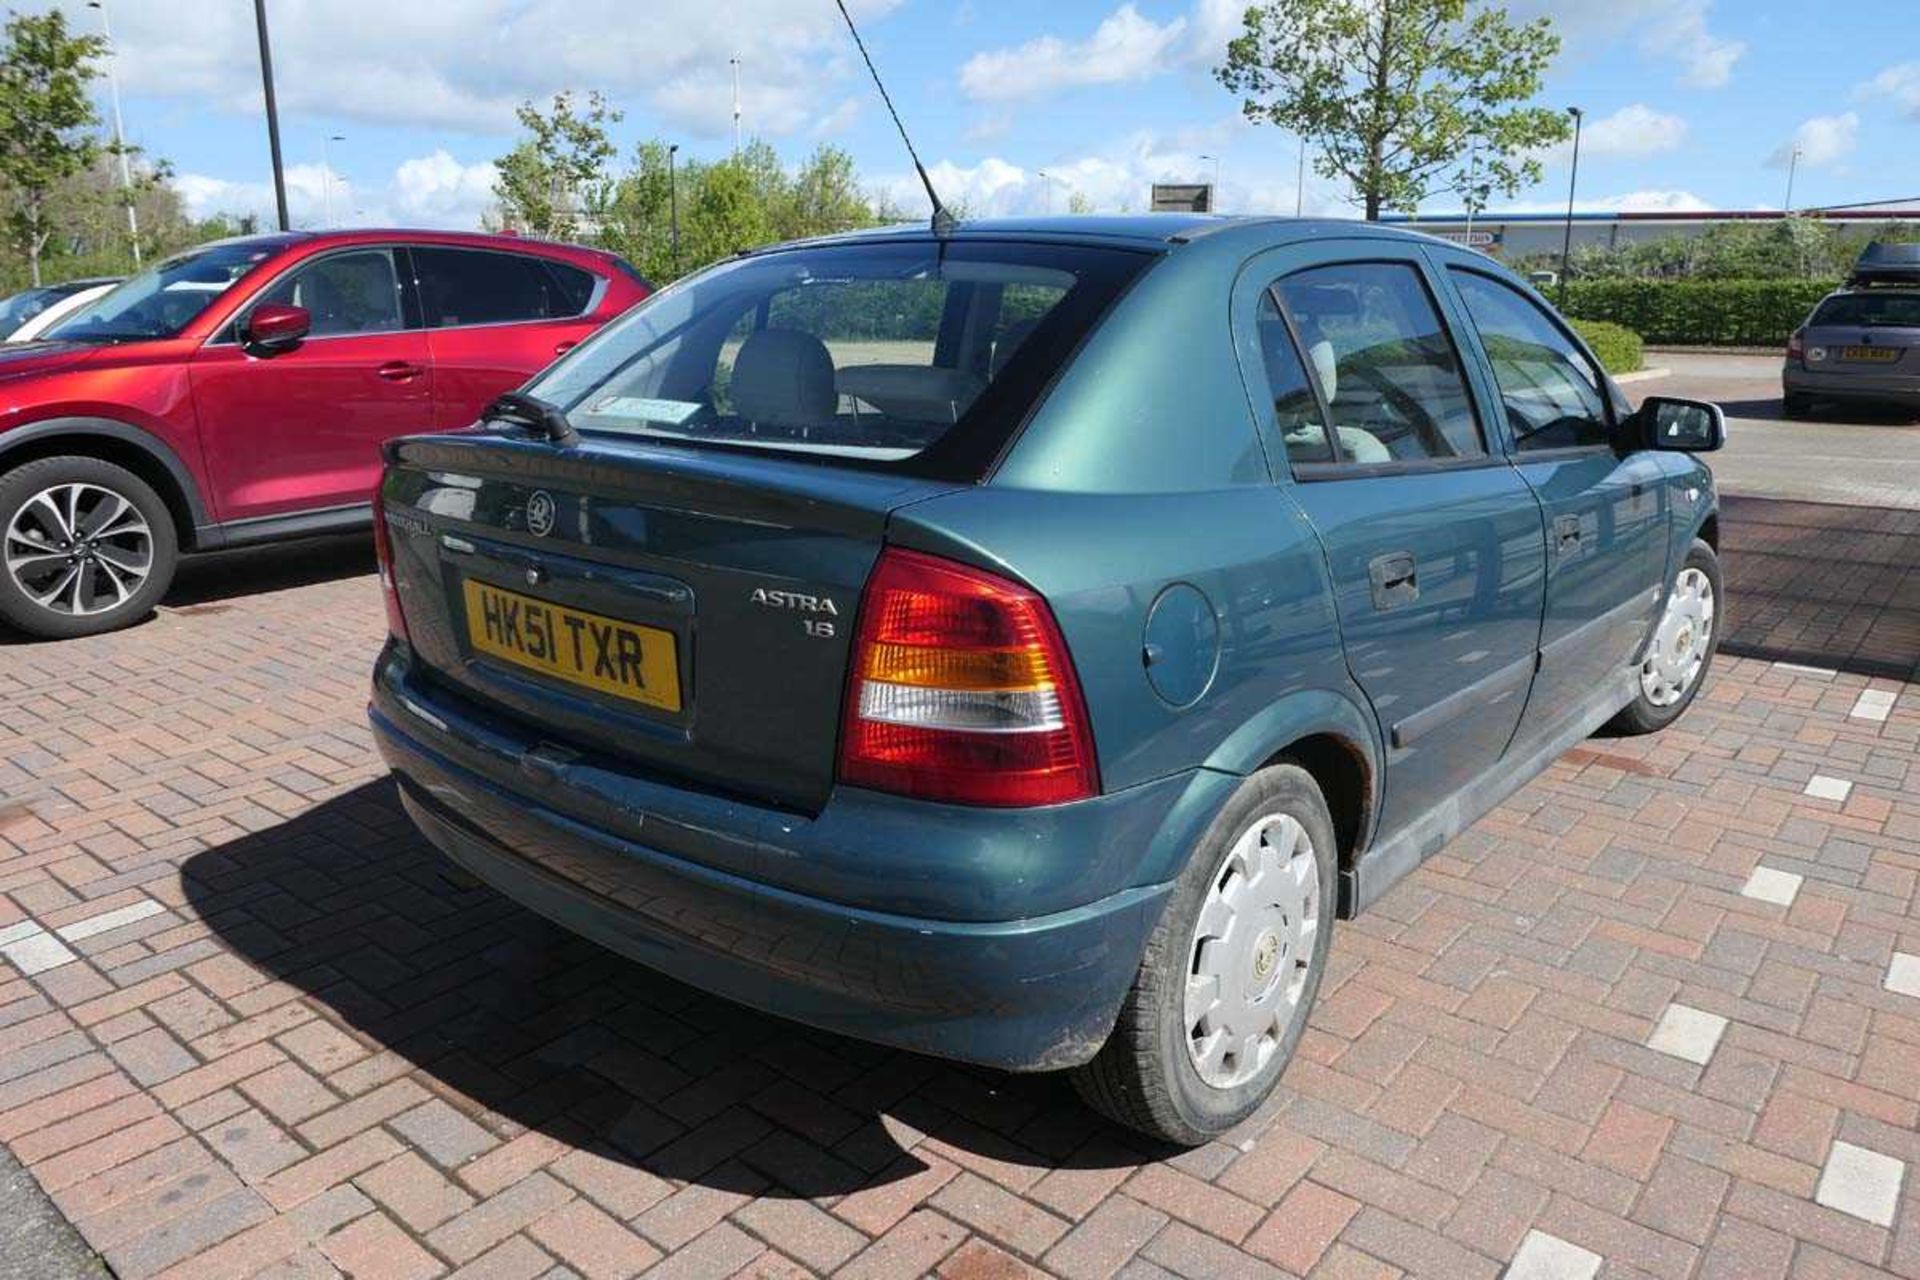 (HK51 TXR) Vauxhall Astra Club 8V, first registered 29.11.2001, 5 door hatchback in green, 1598cc - Image 5 of 11